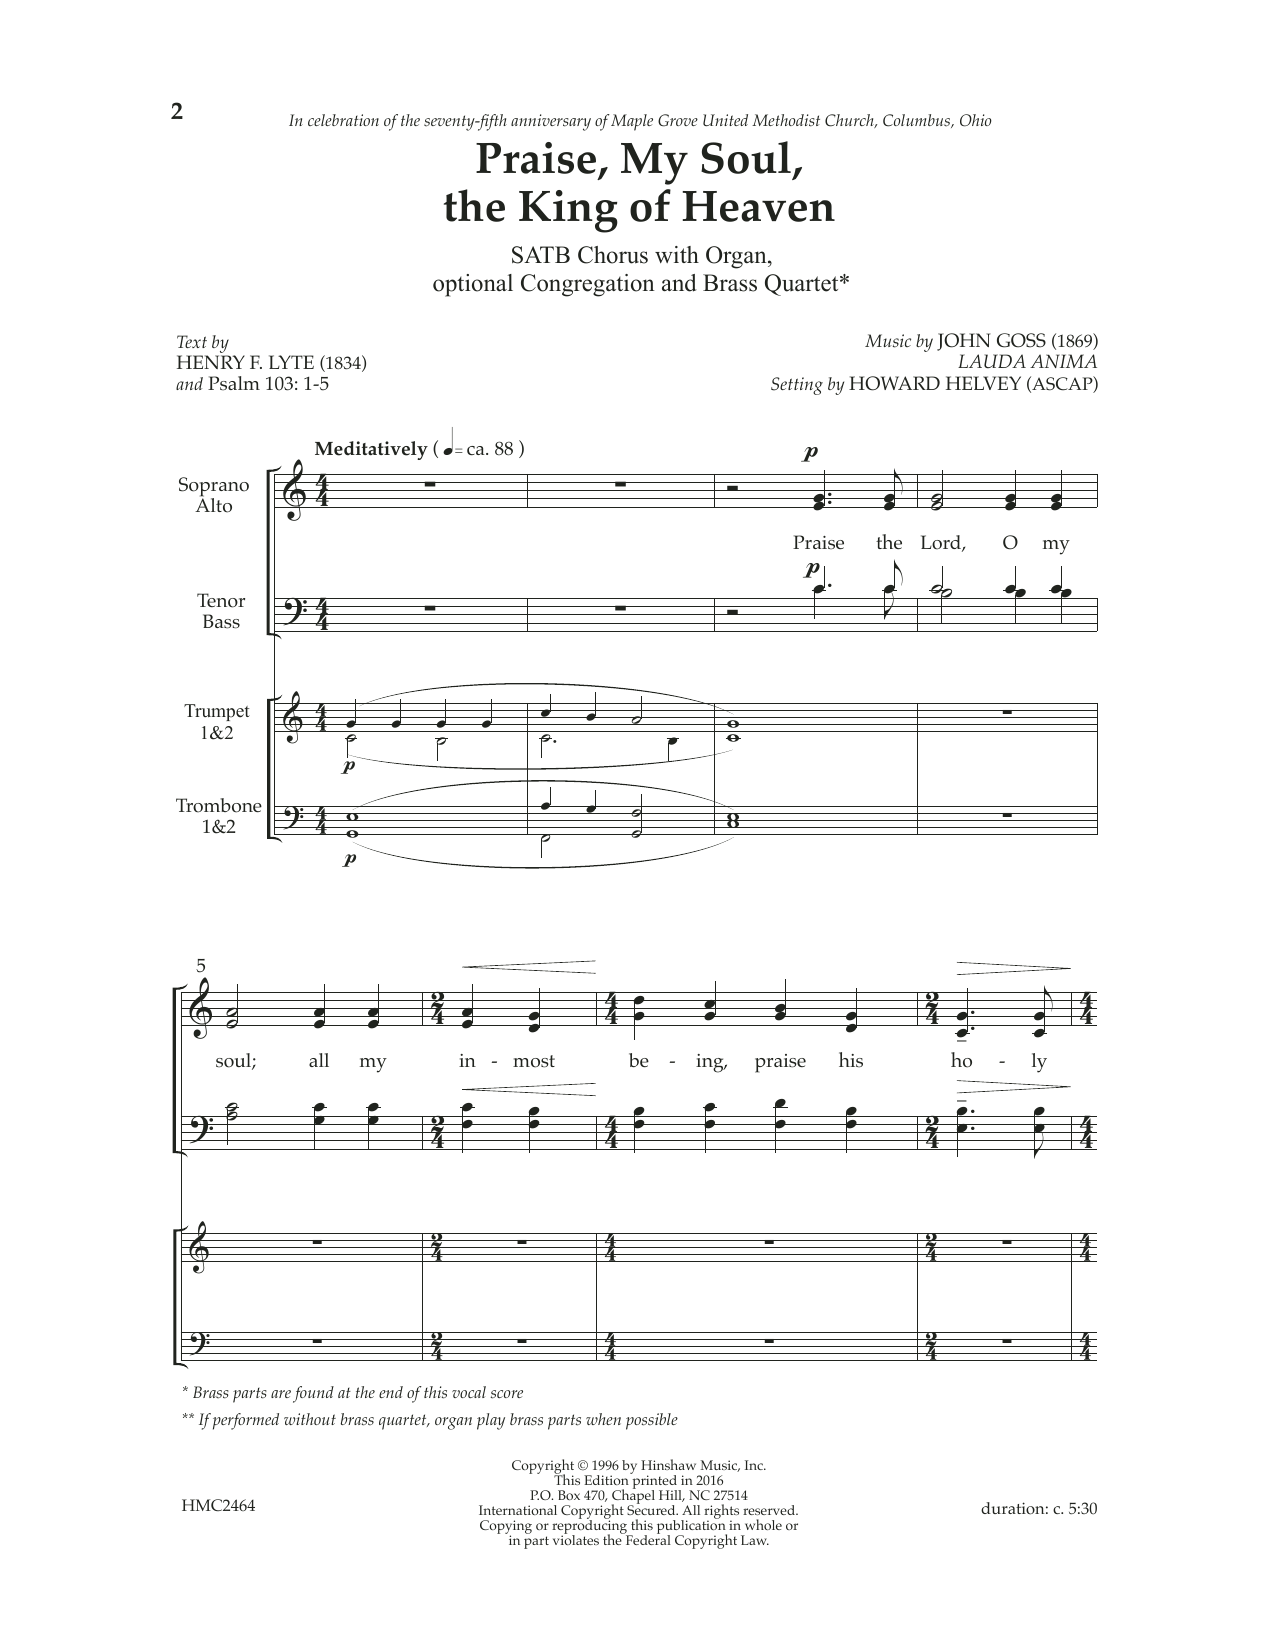 Download Jon Goss Praise, My Soul, The King of Heaven (ar Sheet Music